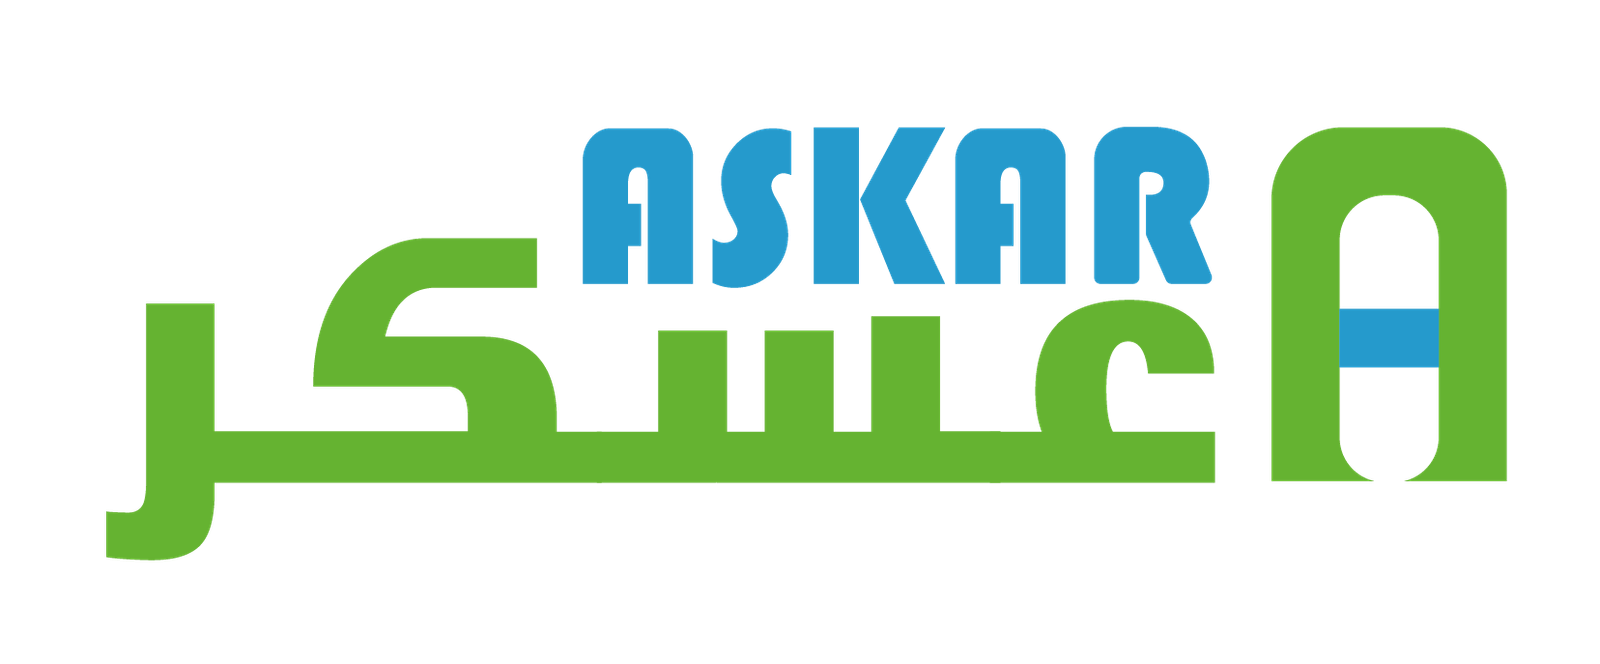 Askar Pharmacy